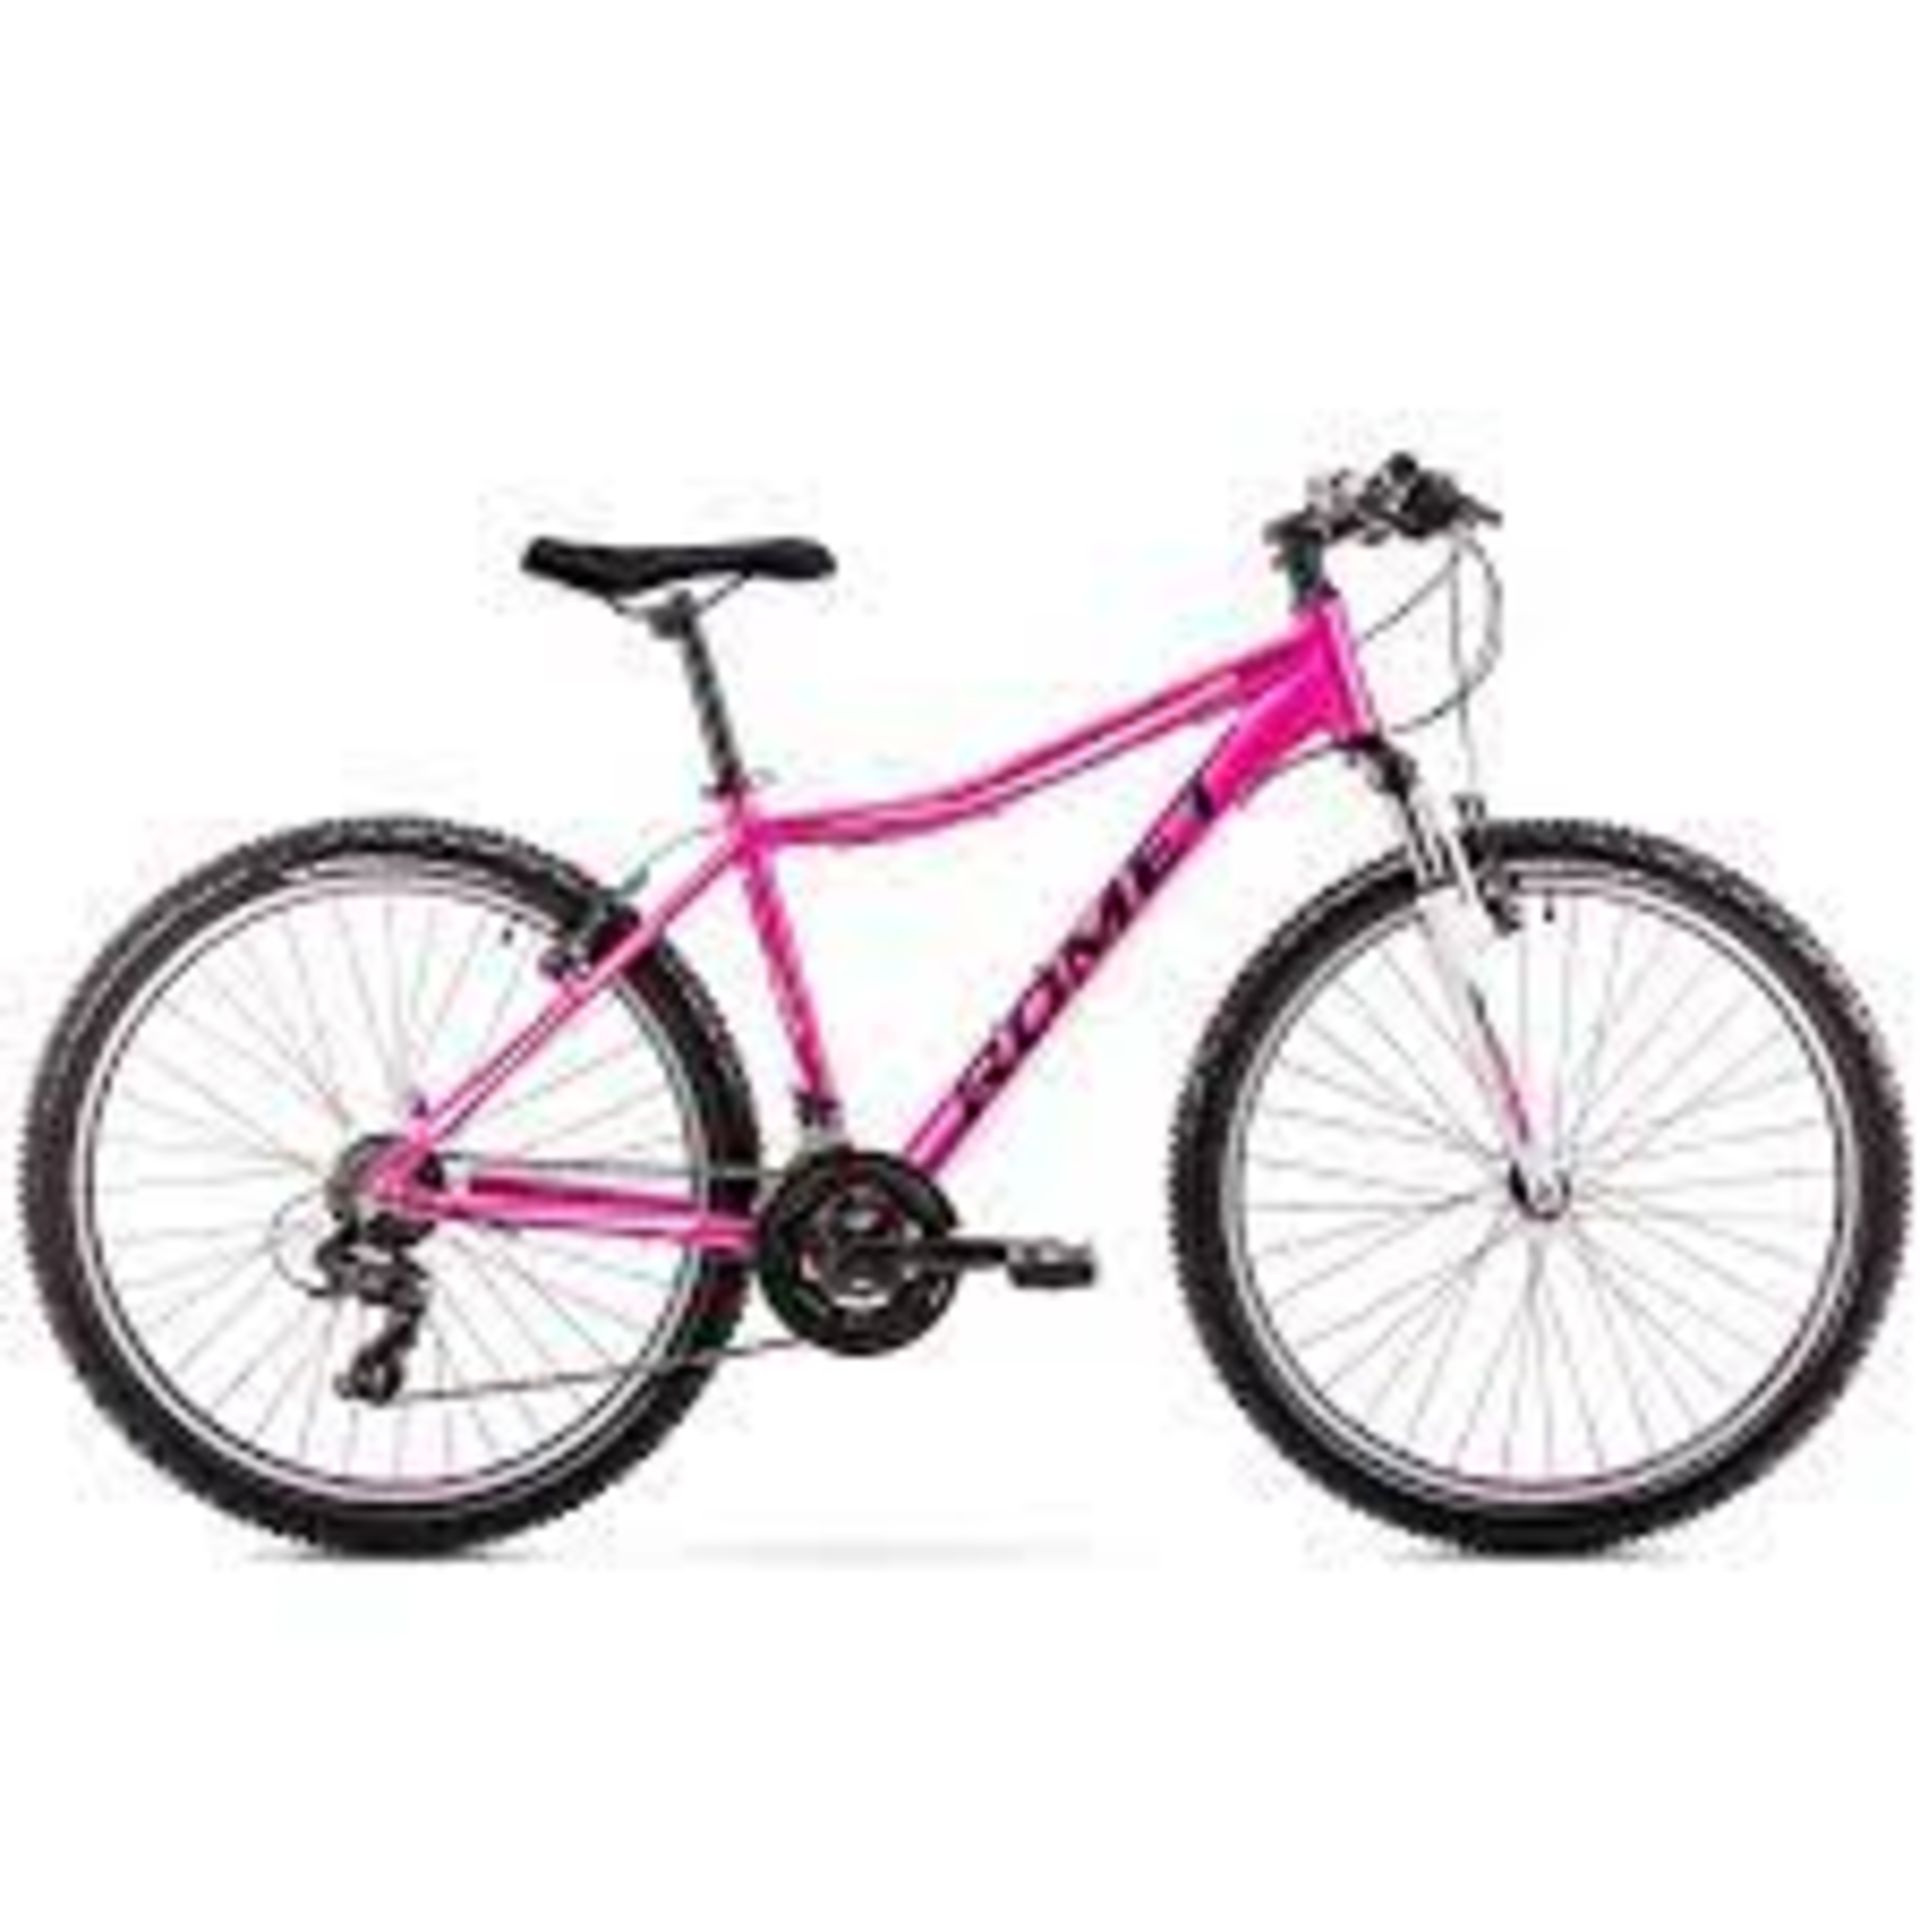 New Boxed Romet Jolene Ladies 6.1 Pink 17" Mountain Bike. RRP £429.99. Introducing the Romet